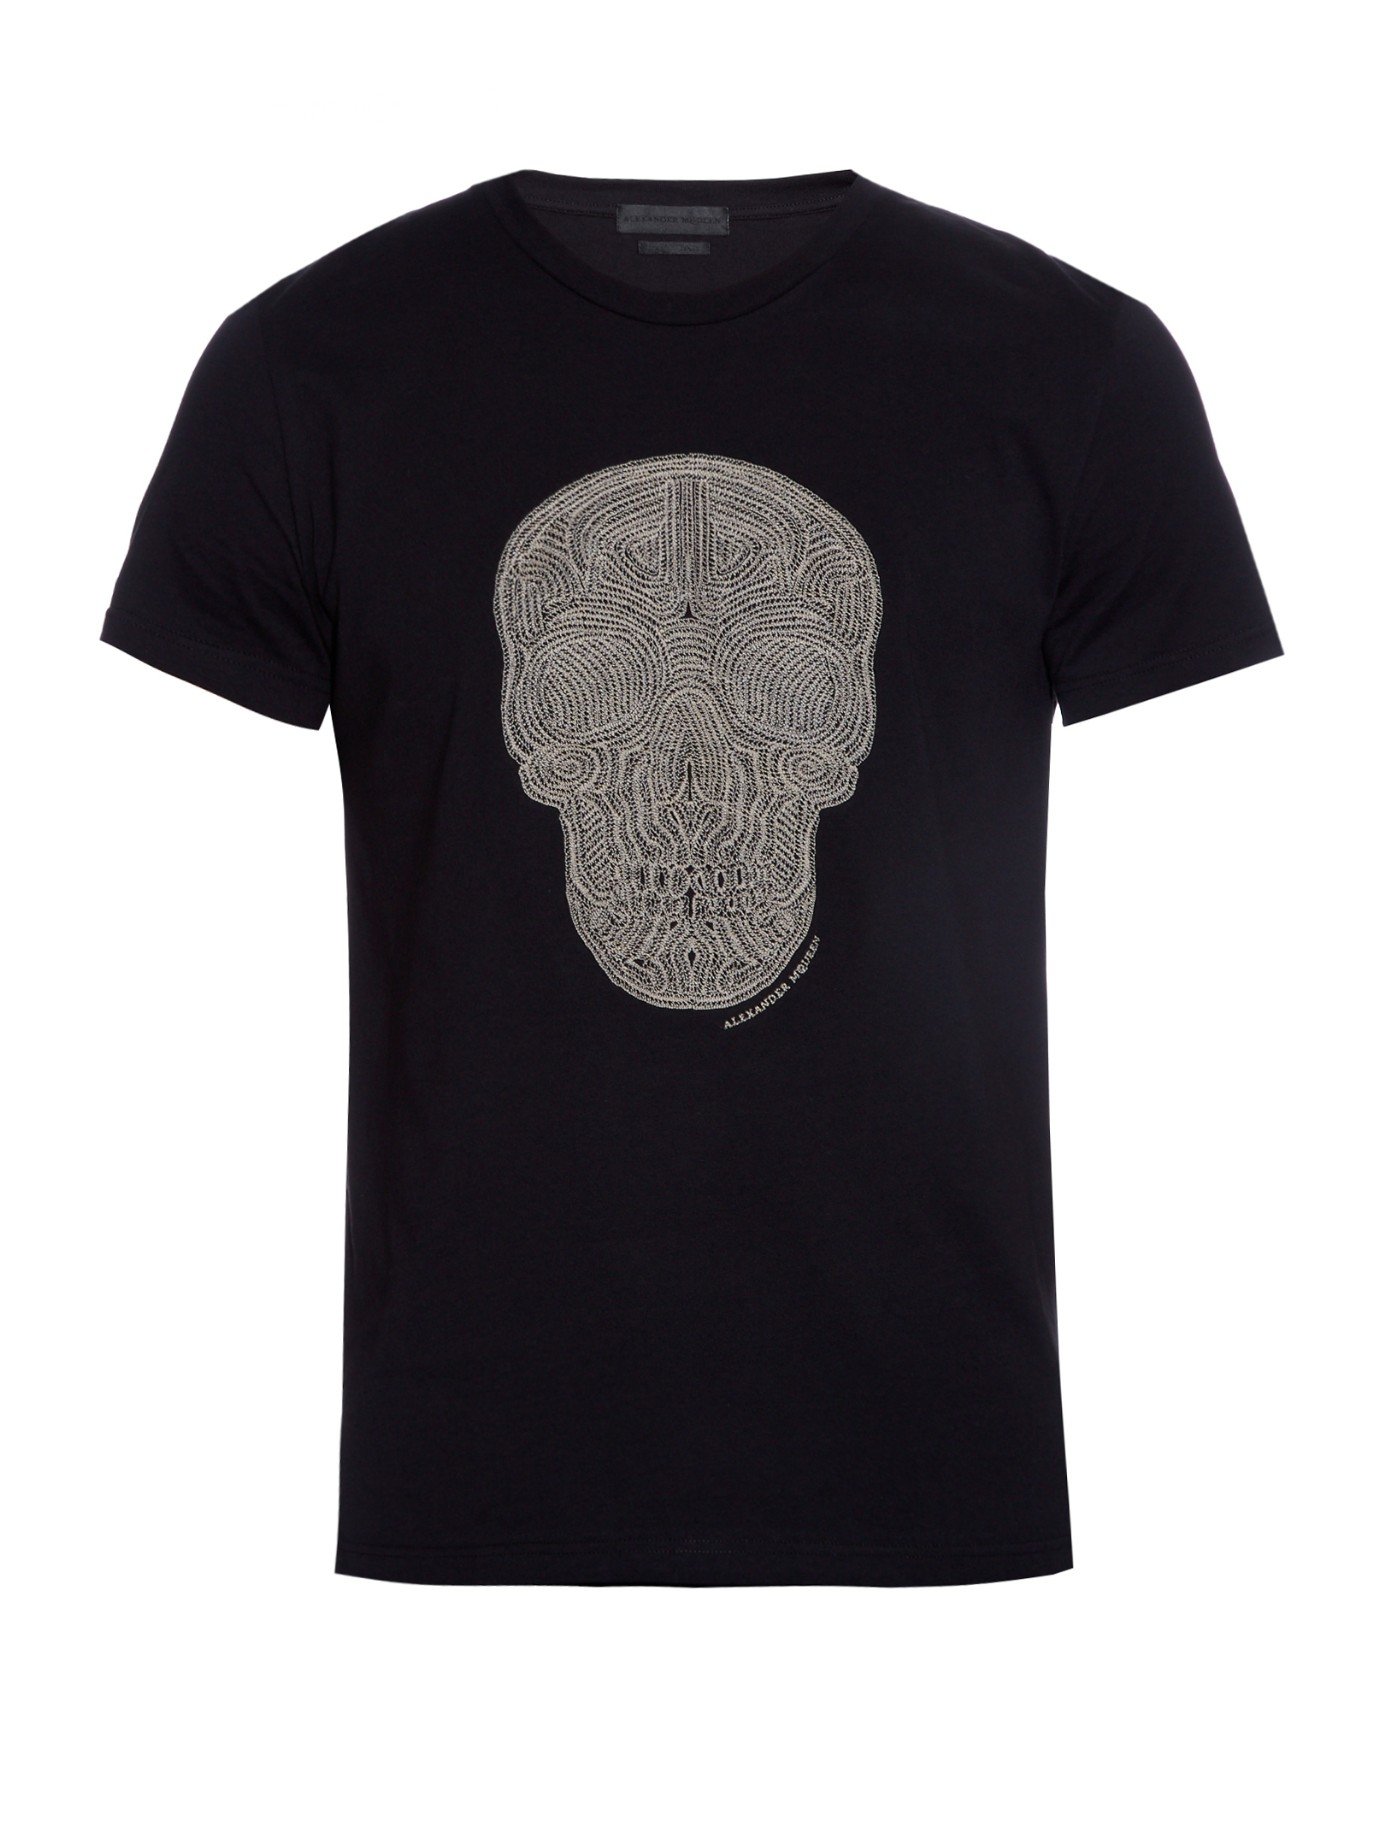 Alexander McQueen Embroidered Skull Cotton T-shirt in Black for Men - Lyst